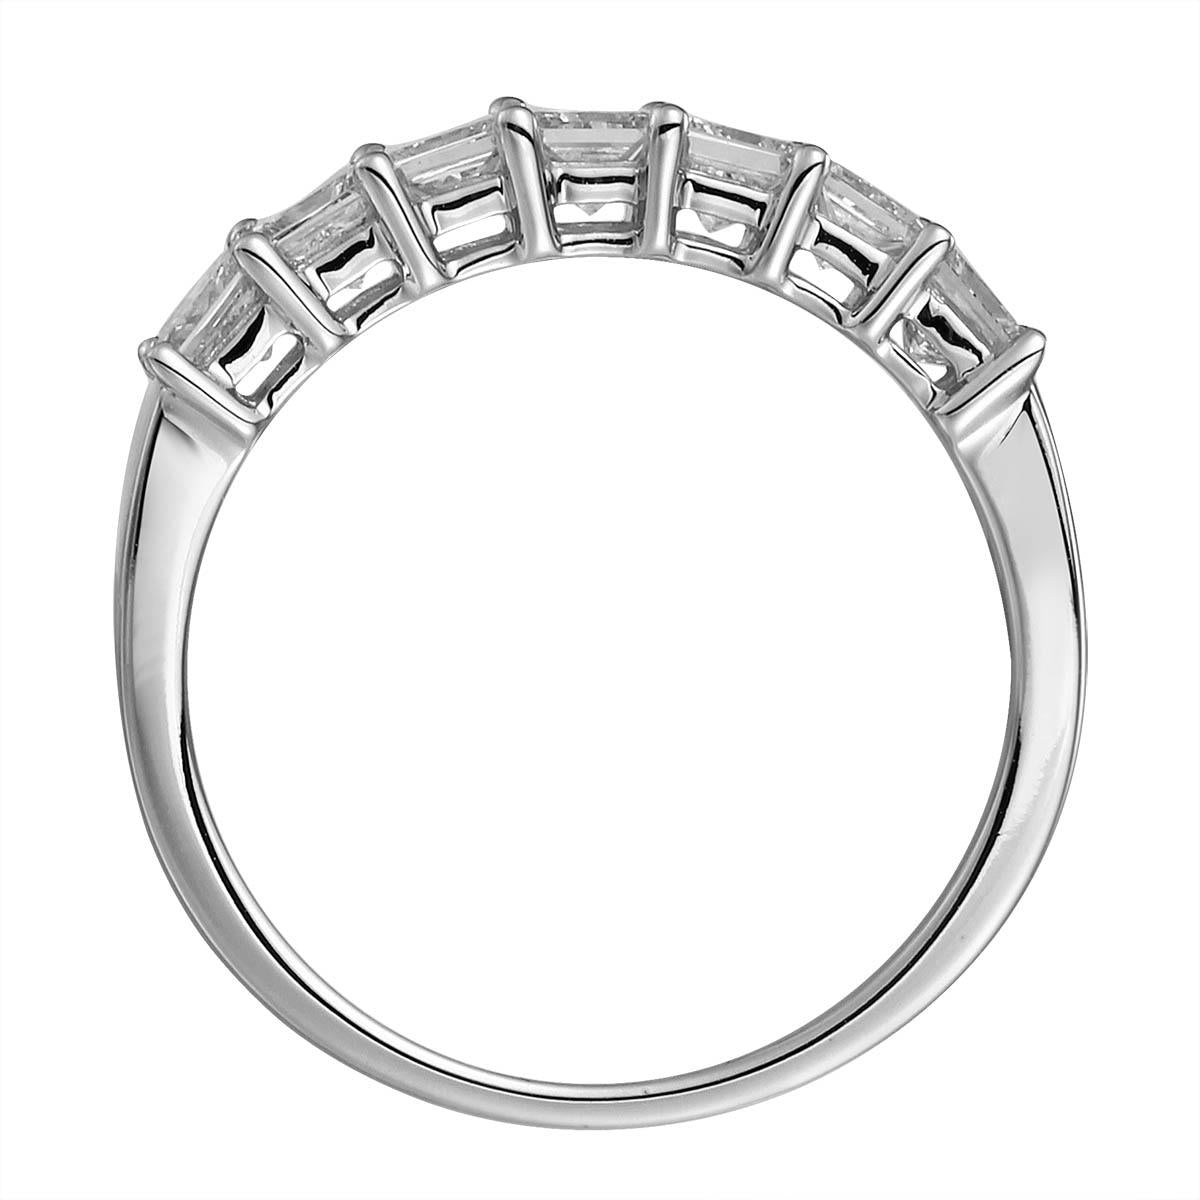 Seven Stone Princess Cut Diamond Ring 1.15ct tw